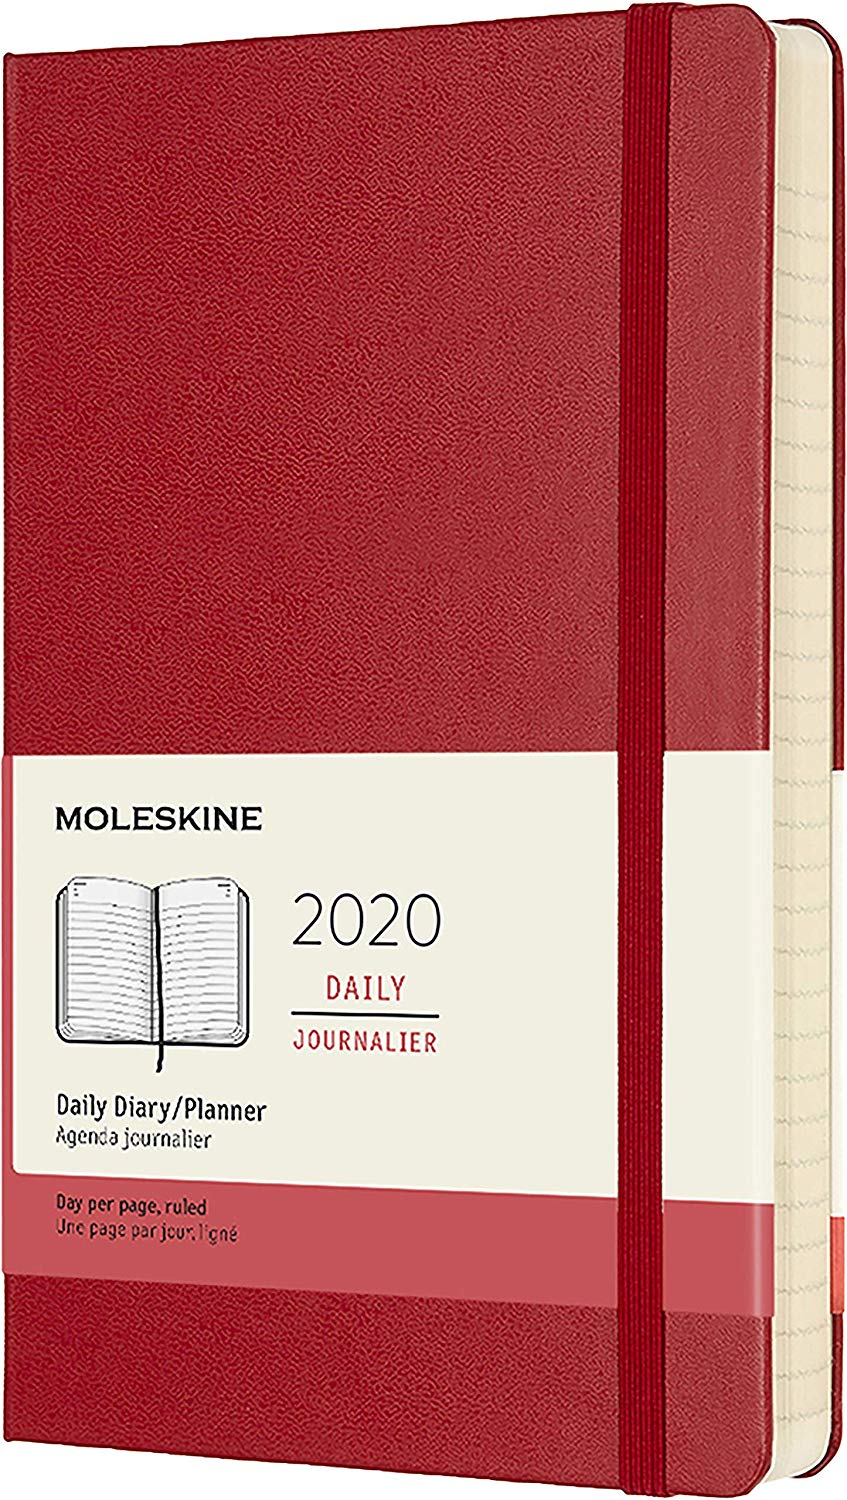 Agenda 2020 - Moleskine 12-Month Daily Notebook Planner - Scarlet Red, Large, Hard cover | Moleskine